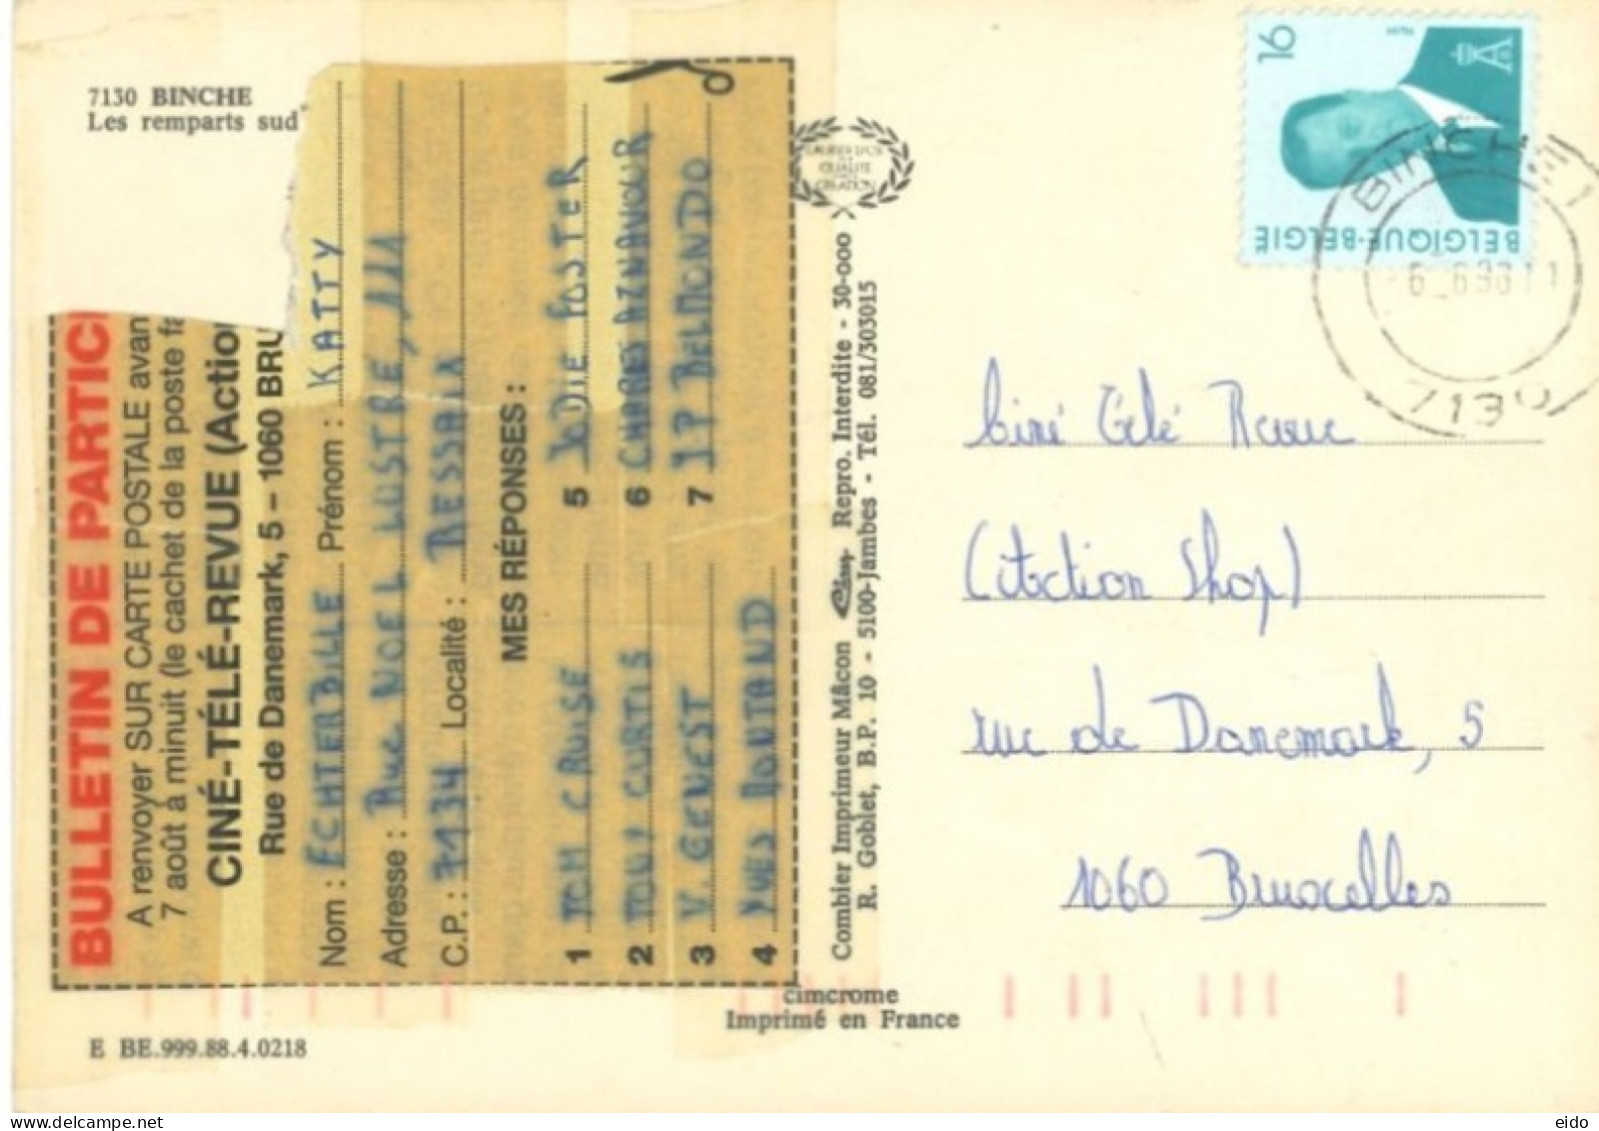 BELGIUM - 1963, BINCHE, LE REMPARTS SUD POSTCARD WITH STAMP SENT TO BRUOCELLES. - Briefe U. Dokumente